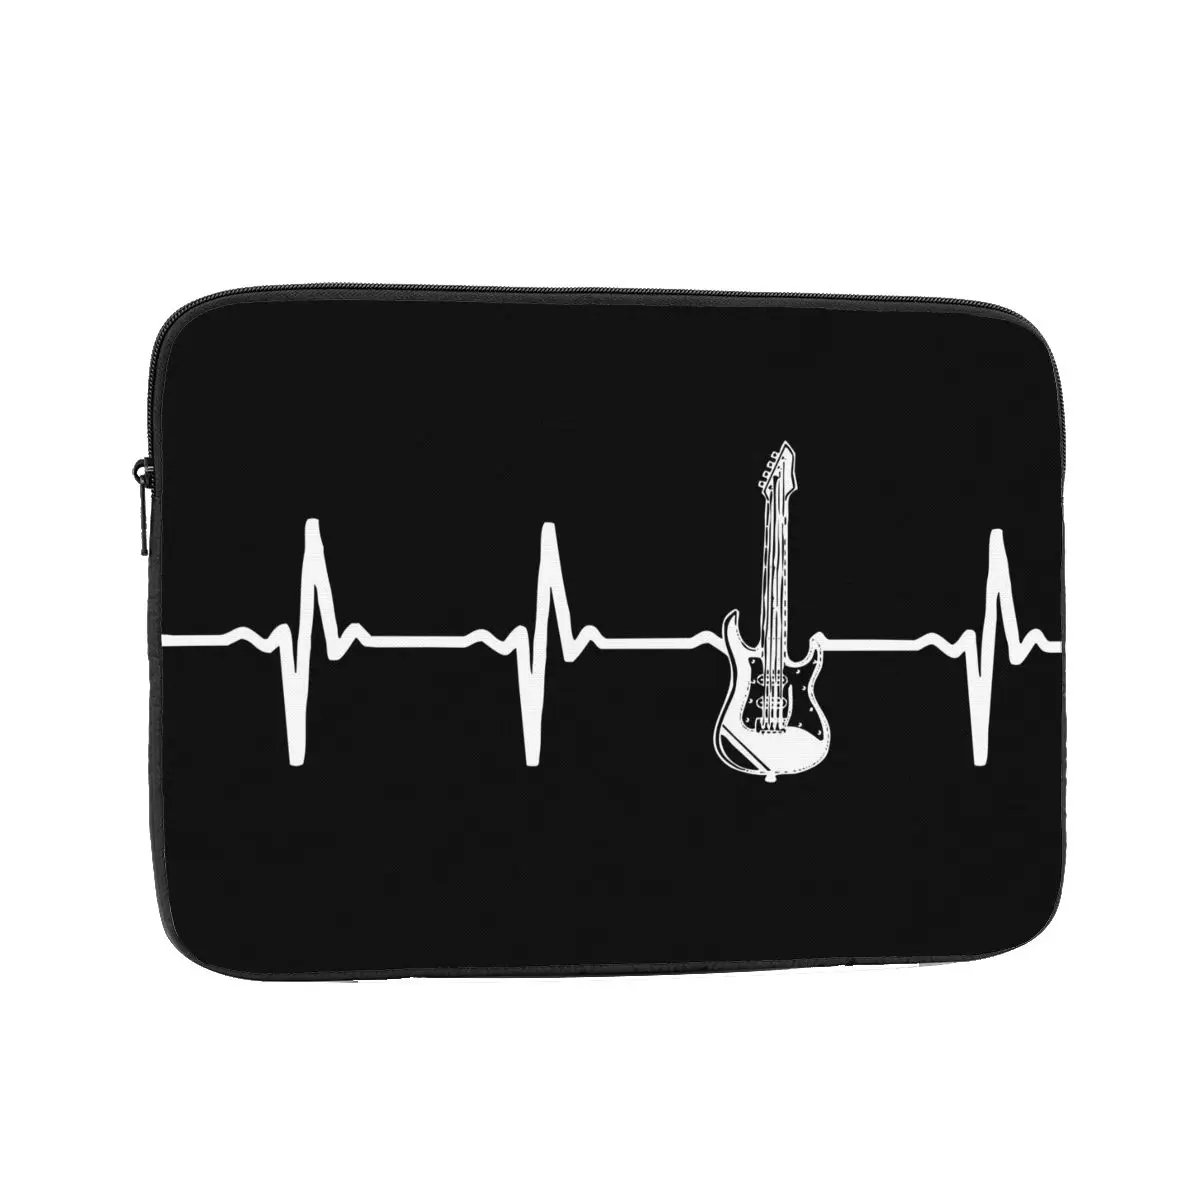 10 12 13 15 17 Inch Electric Guitar Heartbeat Laptop Bag Sle